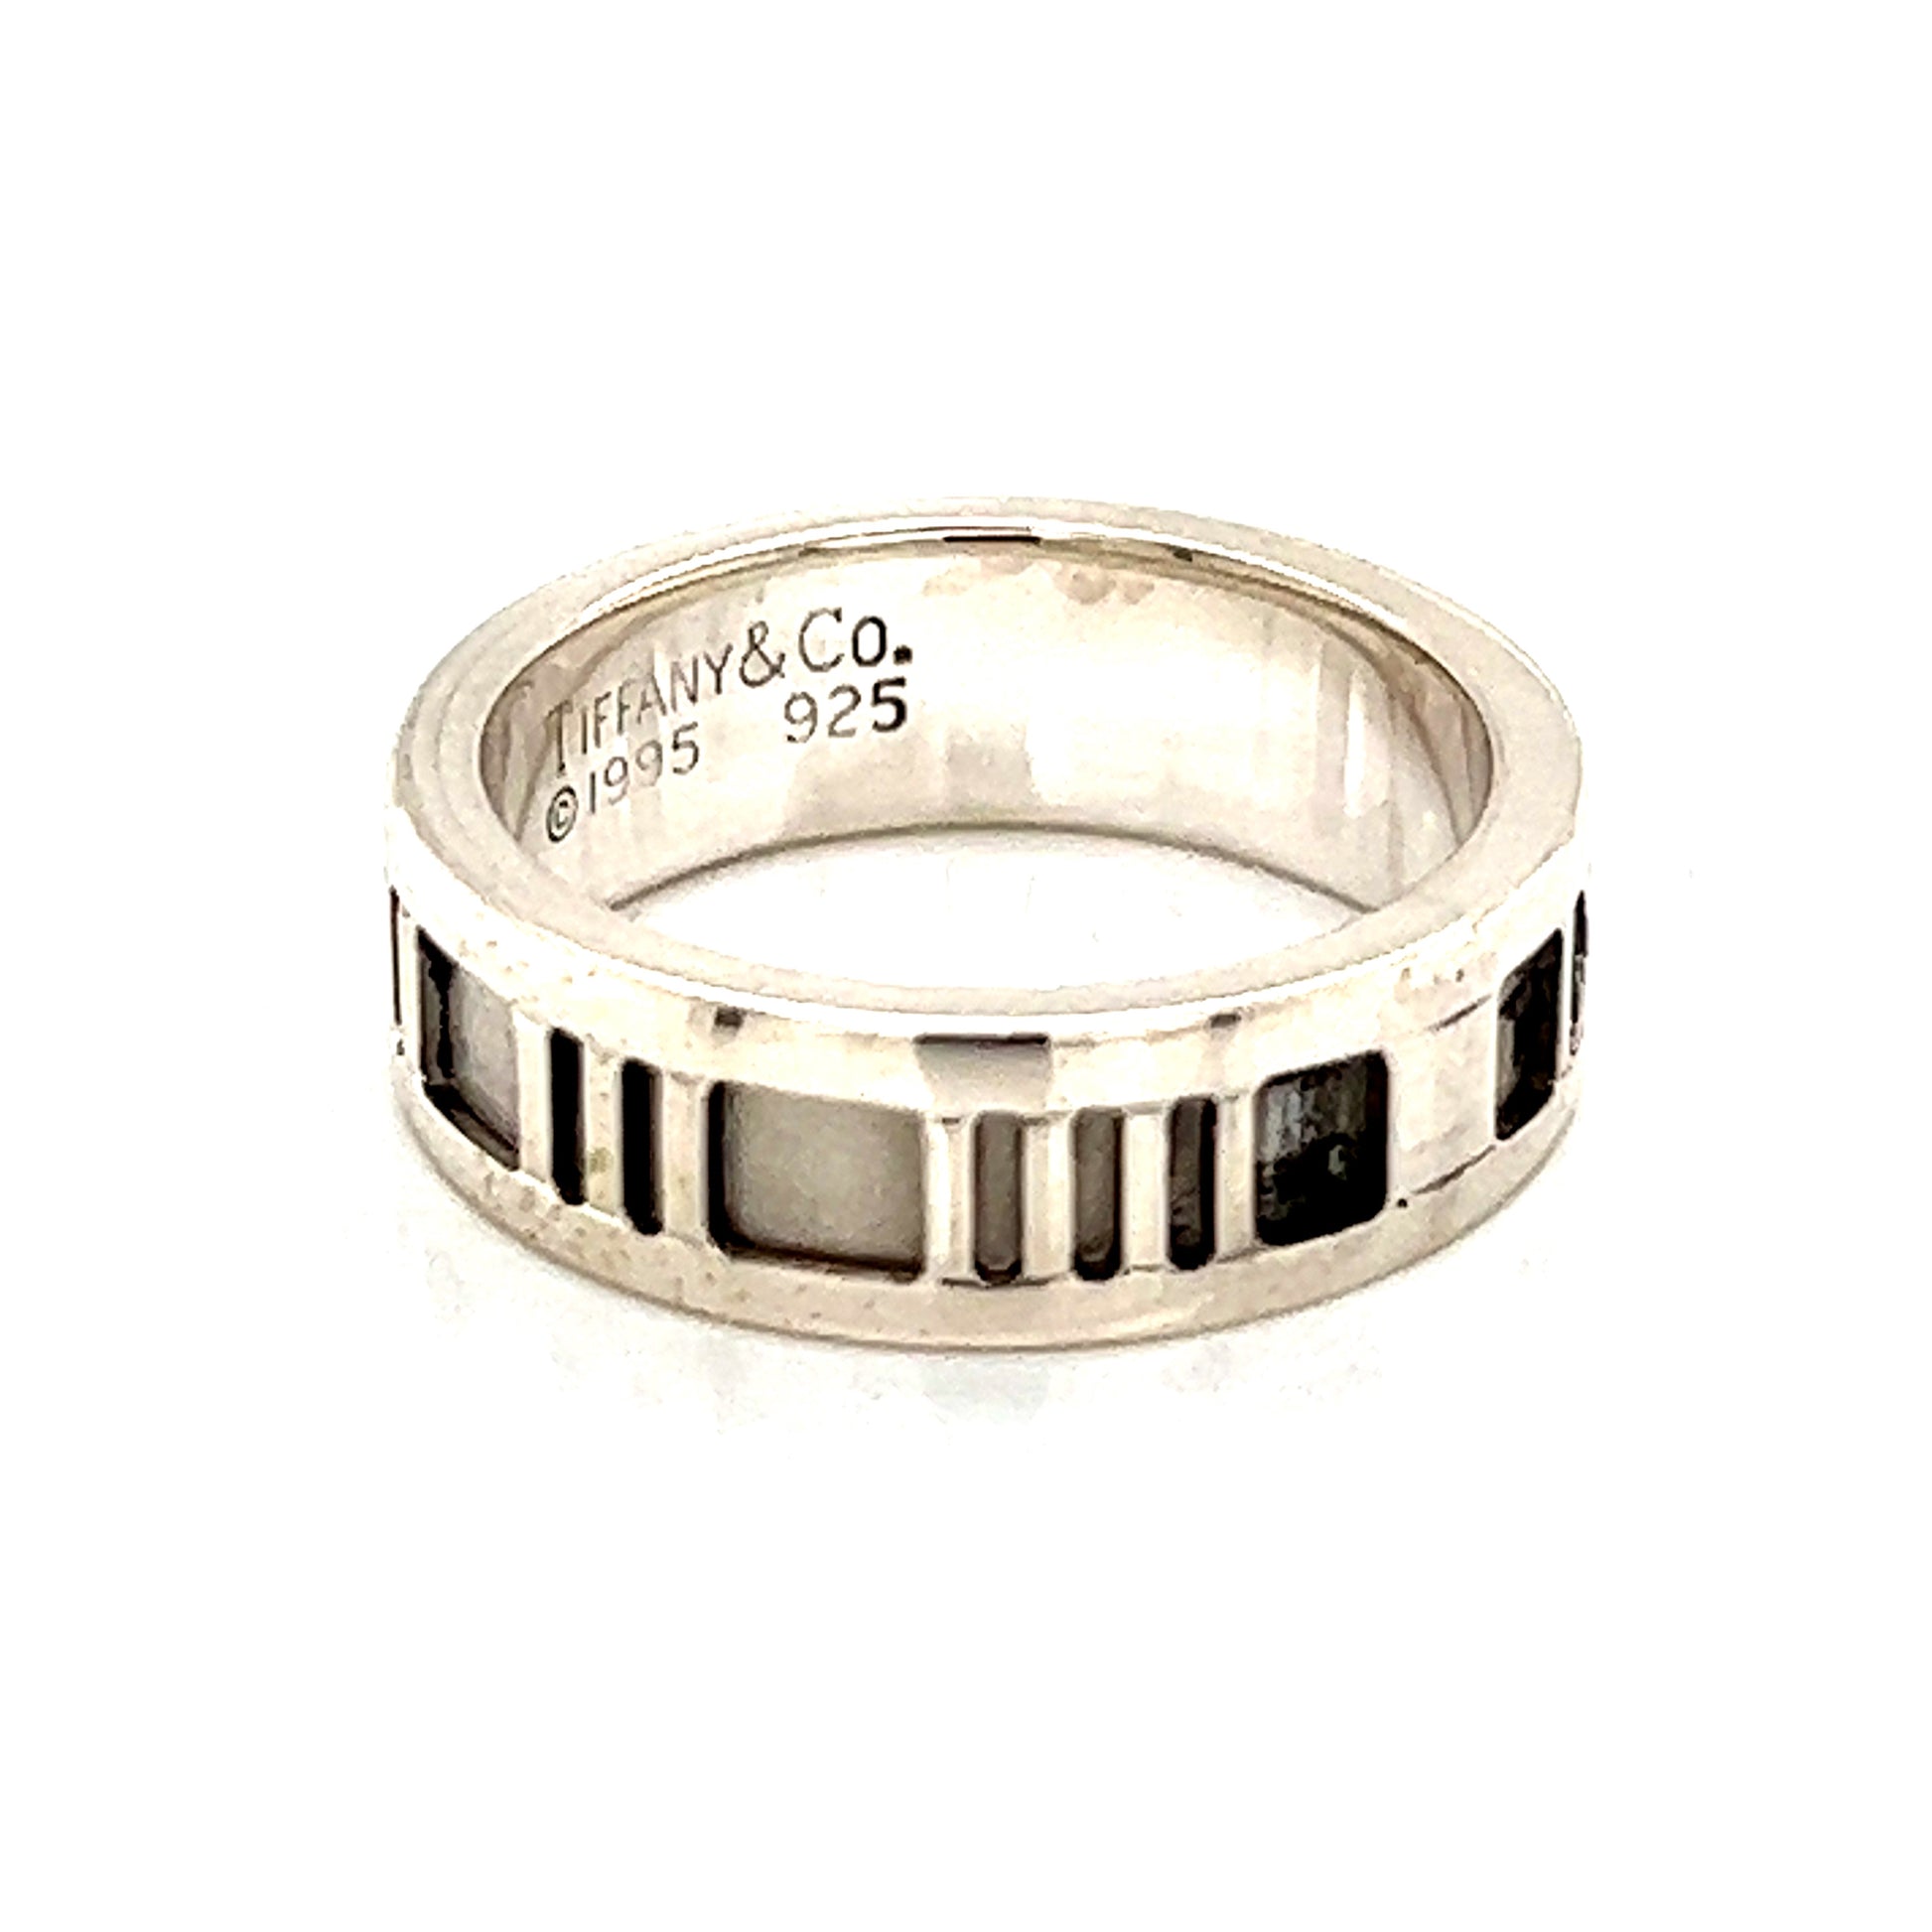 Tiffany & Co Estate Sterling Silver Ring Size 5.25, 4.9 Grams TIF181